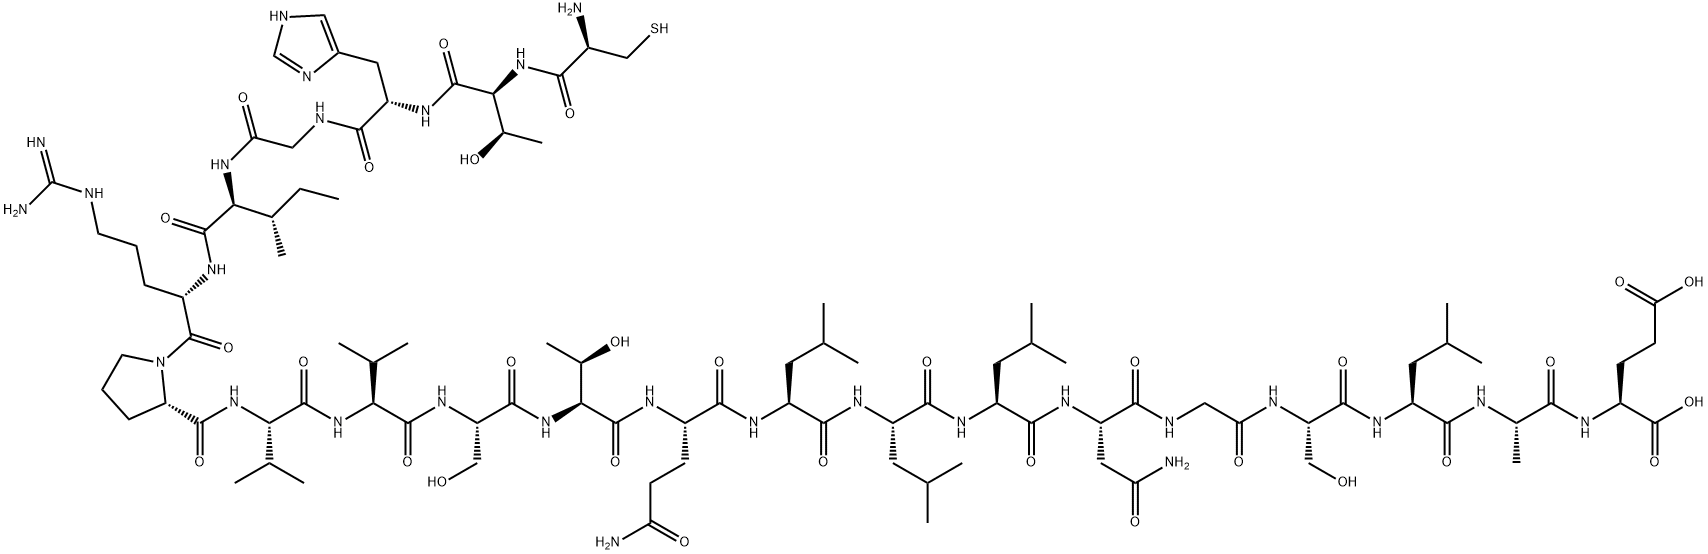 HIV (GP120) FRAGMENT (254-274) Structure